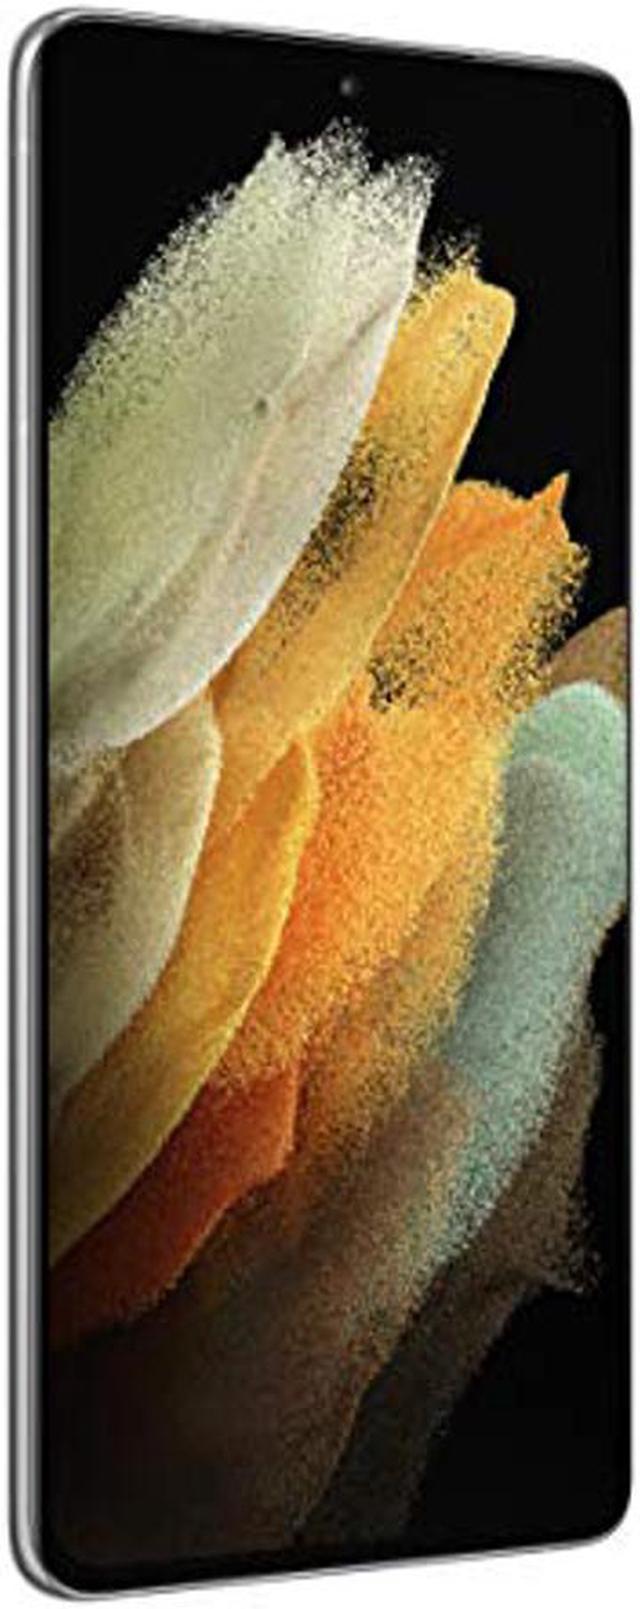 SAMSUNG Galaxy S21 Ultra 5G Factory Unlocked Android Cell Phone 128GB US  Version Smartphone Pro-Grade Camera 8K Video 108MP High Res, Phantom Black